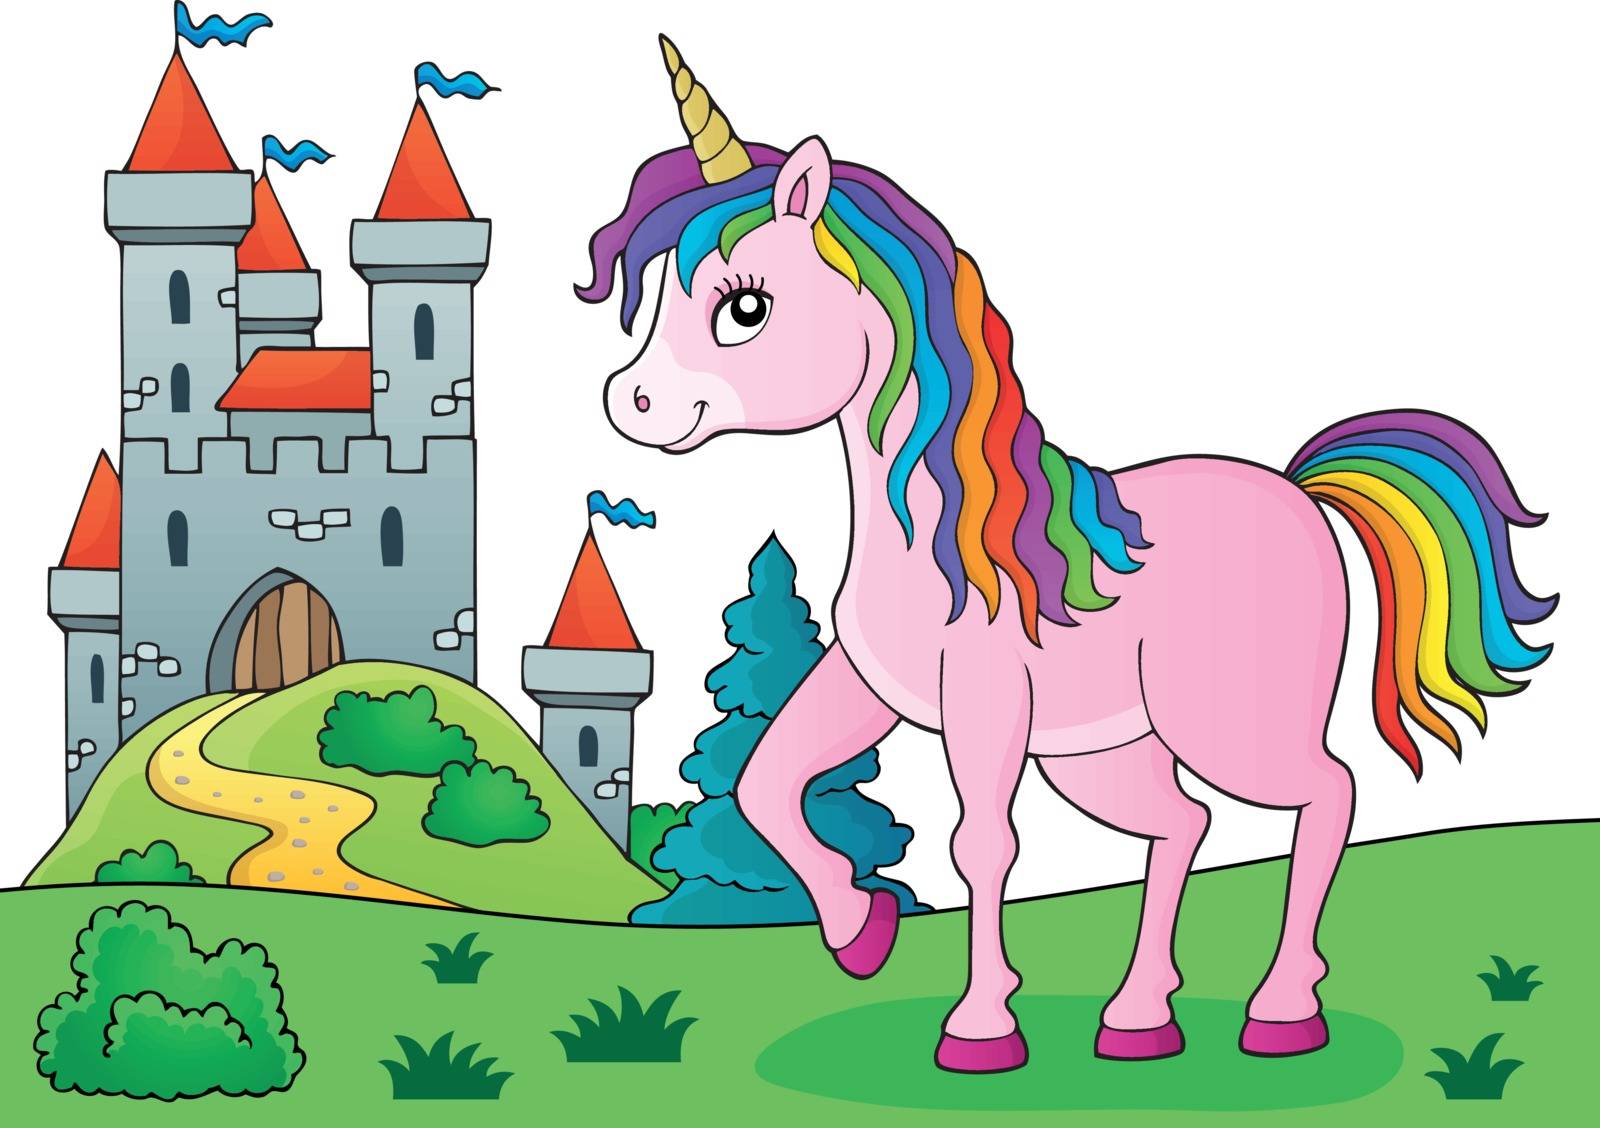 Happy unicorn topic image 5 - eps10 vector illustration.